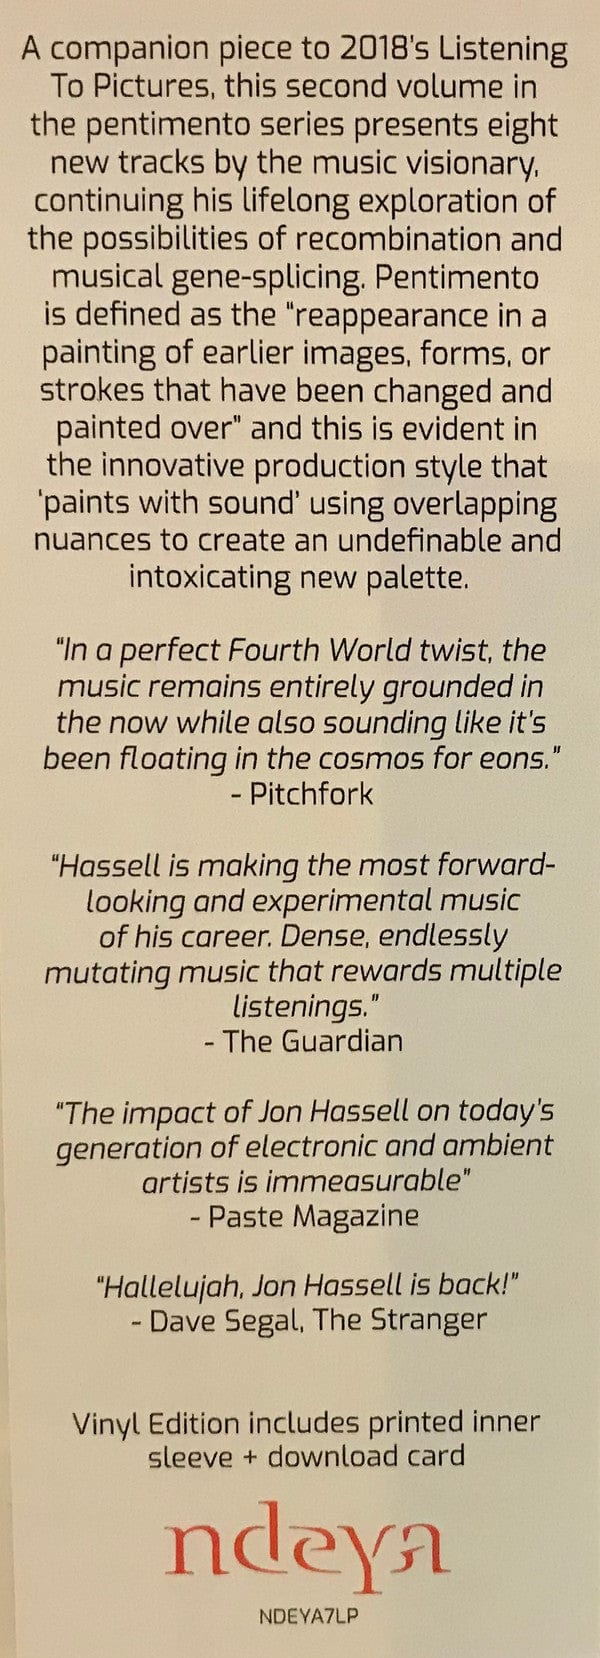 Jon Hassell - Seeing Through Sound (Pentimento Volume Two) (LP) Ndeya Vinyl 5060384617695